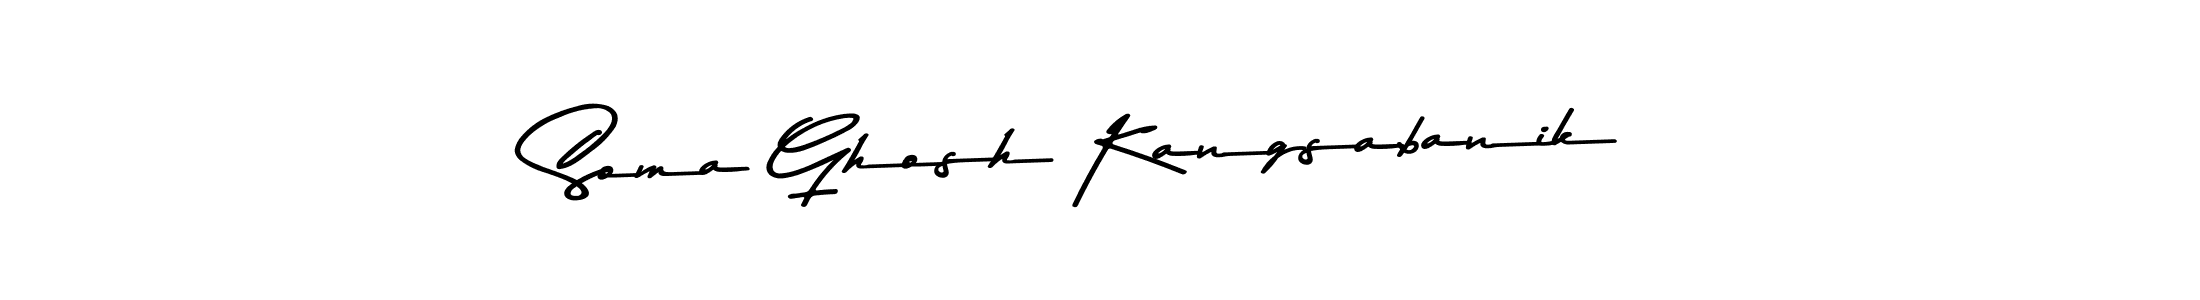 Soma Ghosh Kangsabanik stylish signature style. Best Handwritten Sign (Asem Kandis PERSONAL USE) for my name. Handwritten Signature Collection Ideas for my name Soma Ghosh Kangsabanik. Soma Ghosh Kangsabanik signature style 9 images and pictures png